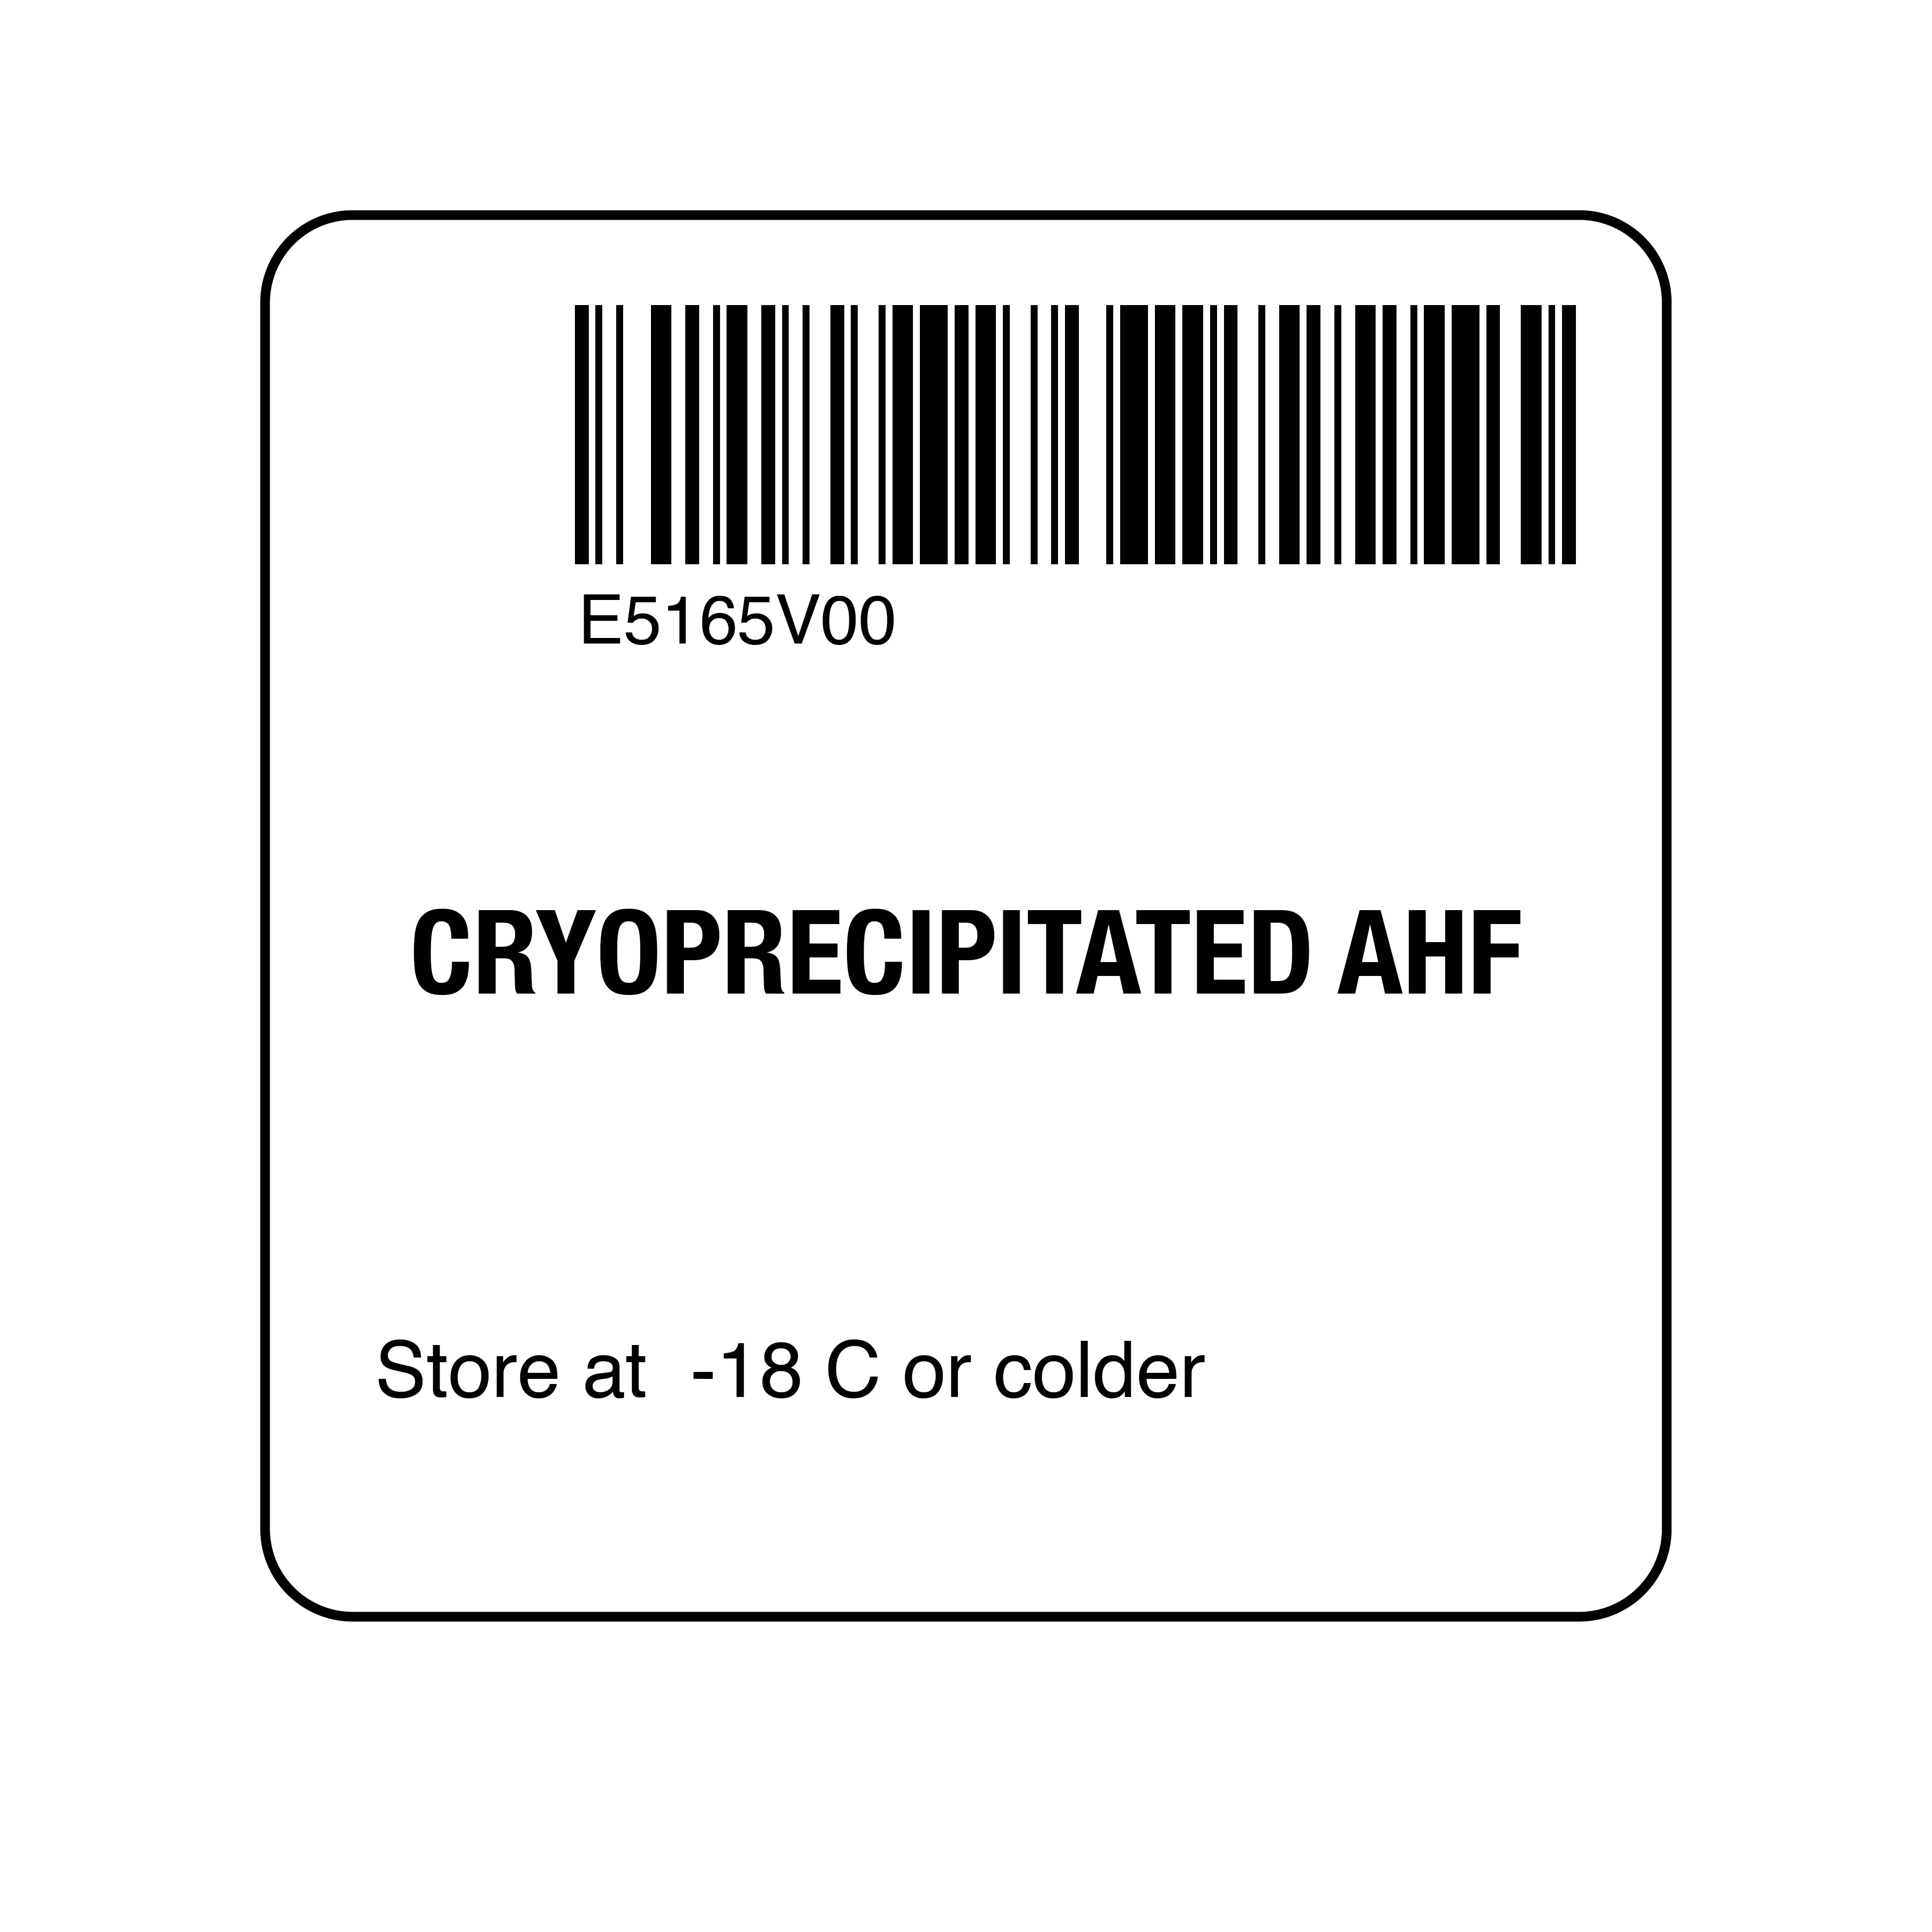 ISBT 128 Cryoprecipitated AHF